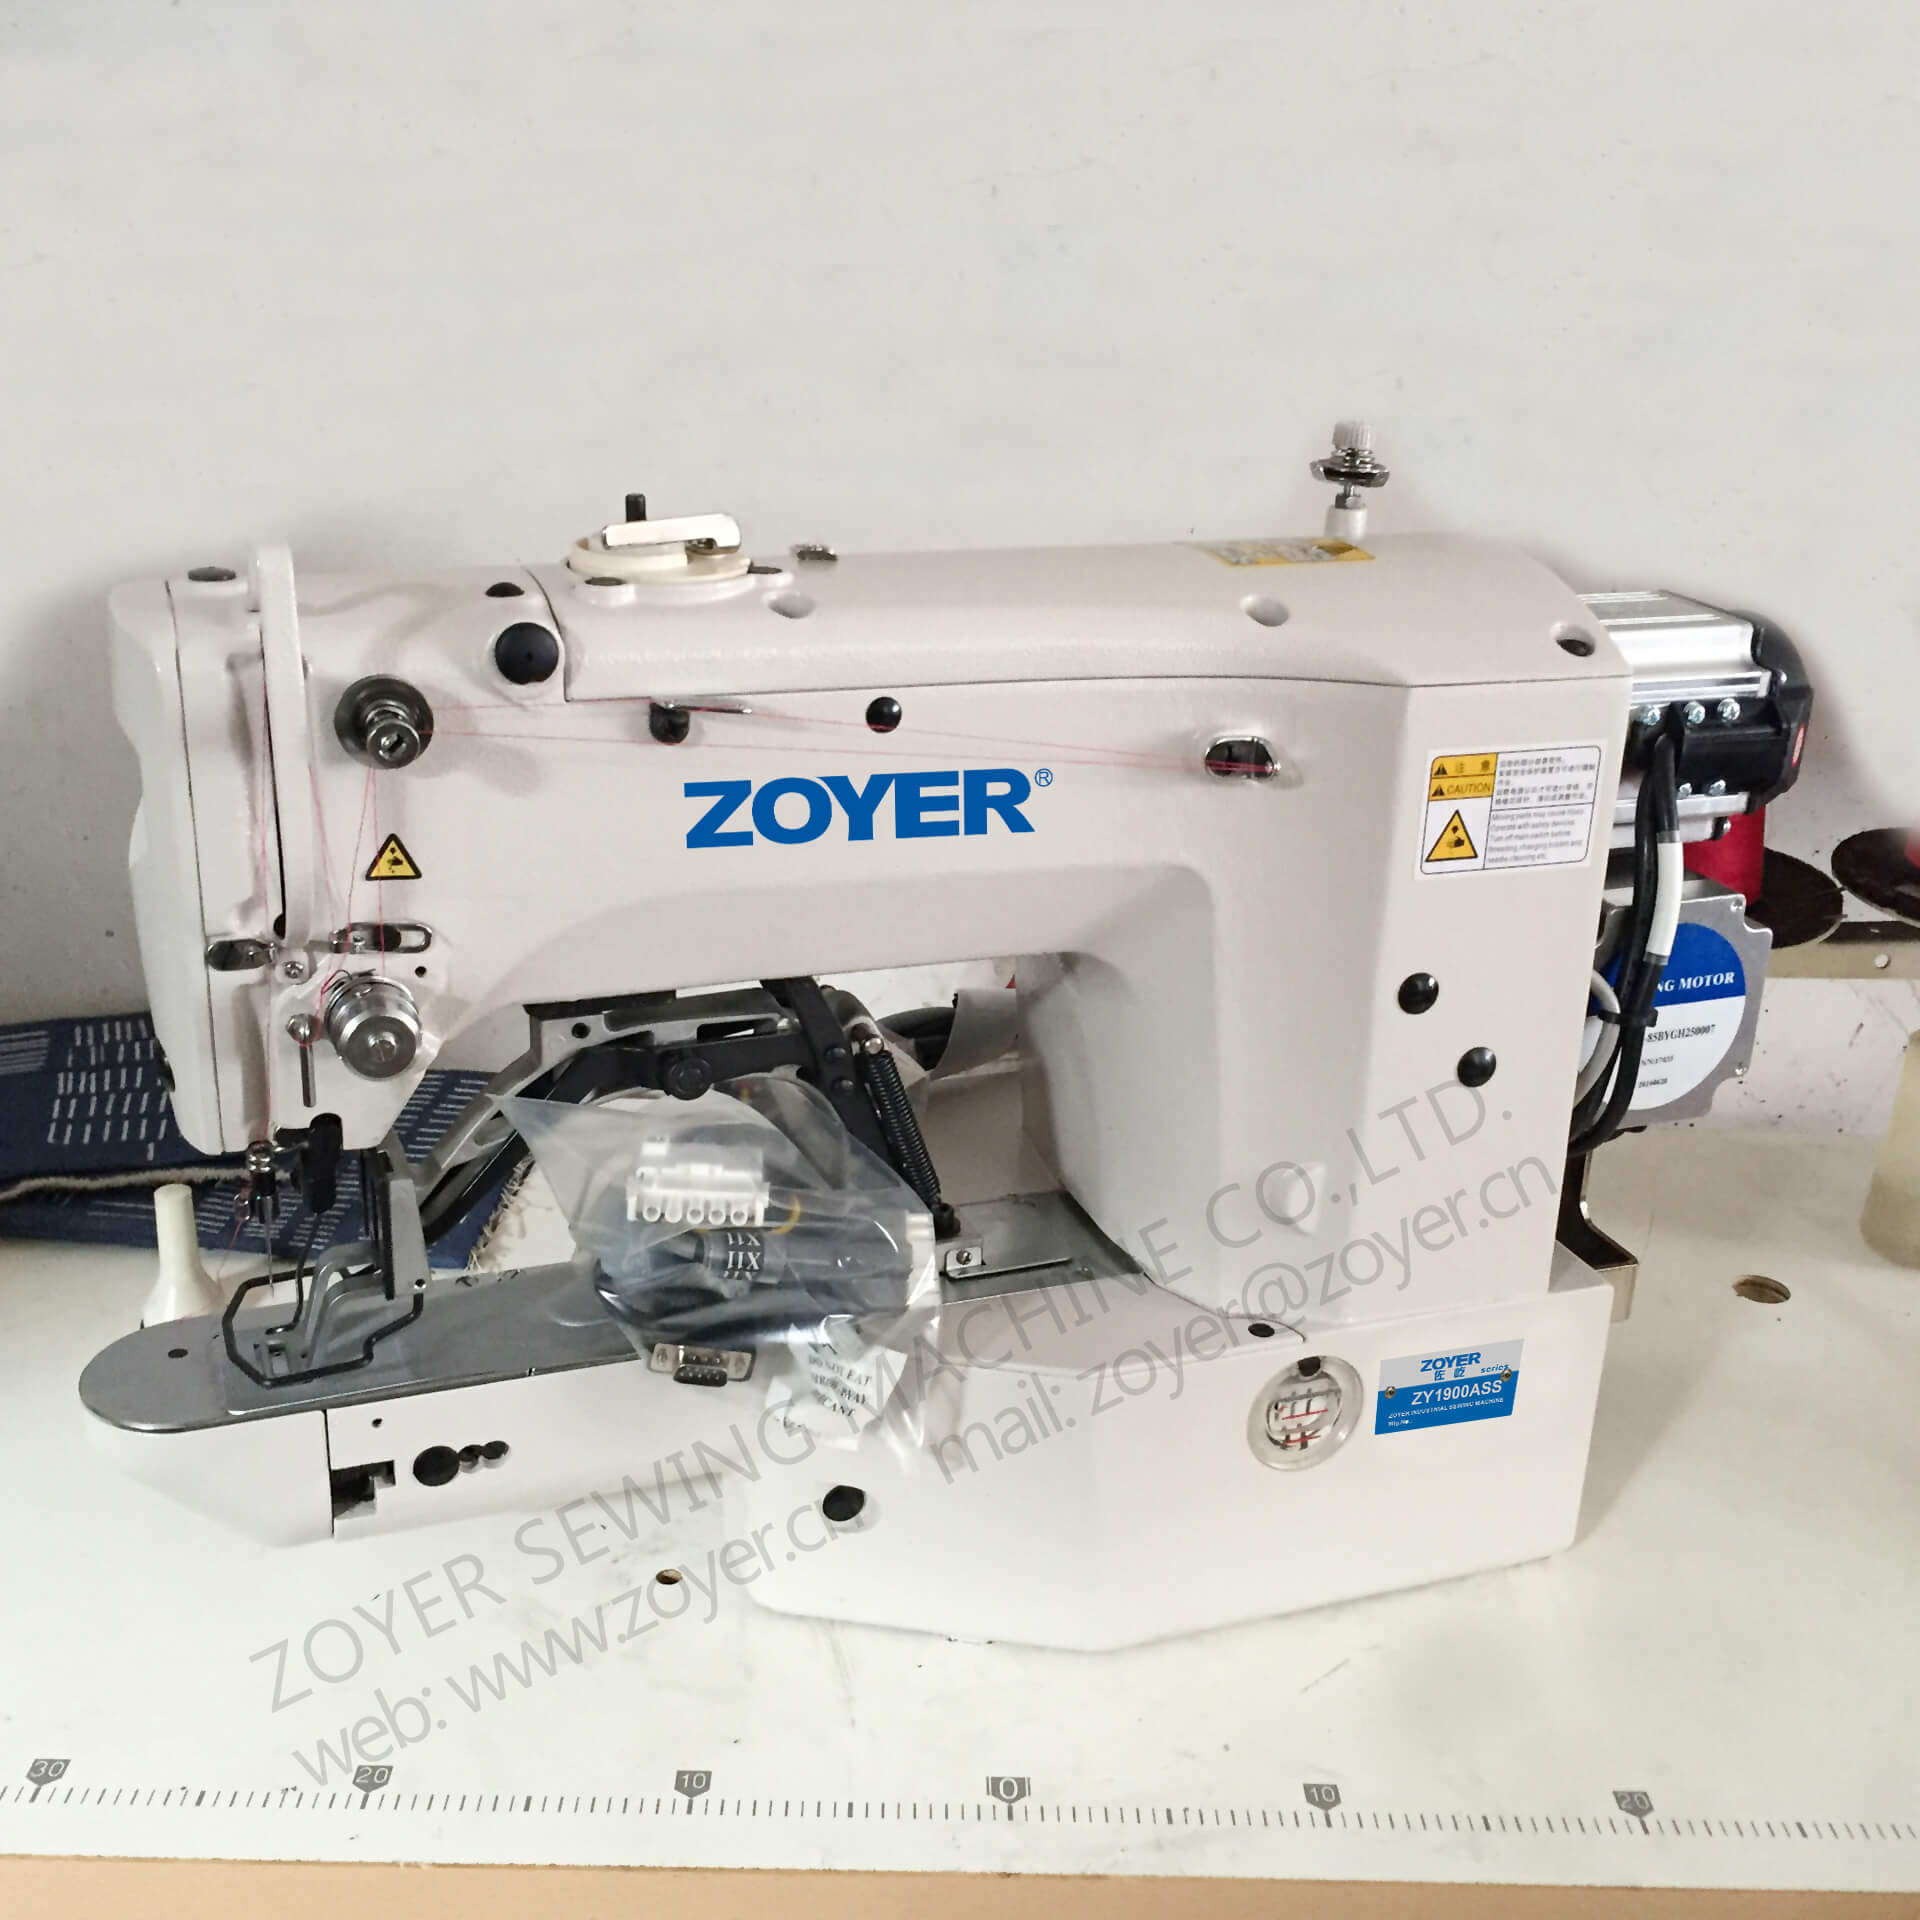 ZY1900A zoyer direct drive bar tacking sewing machine